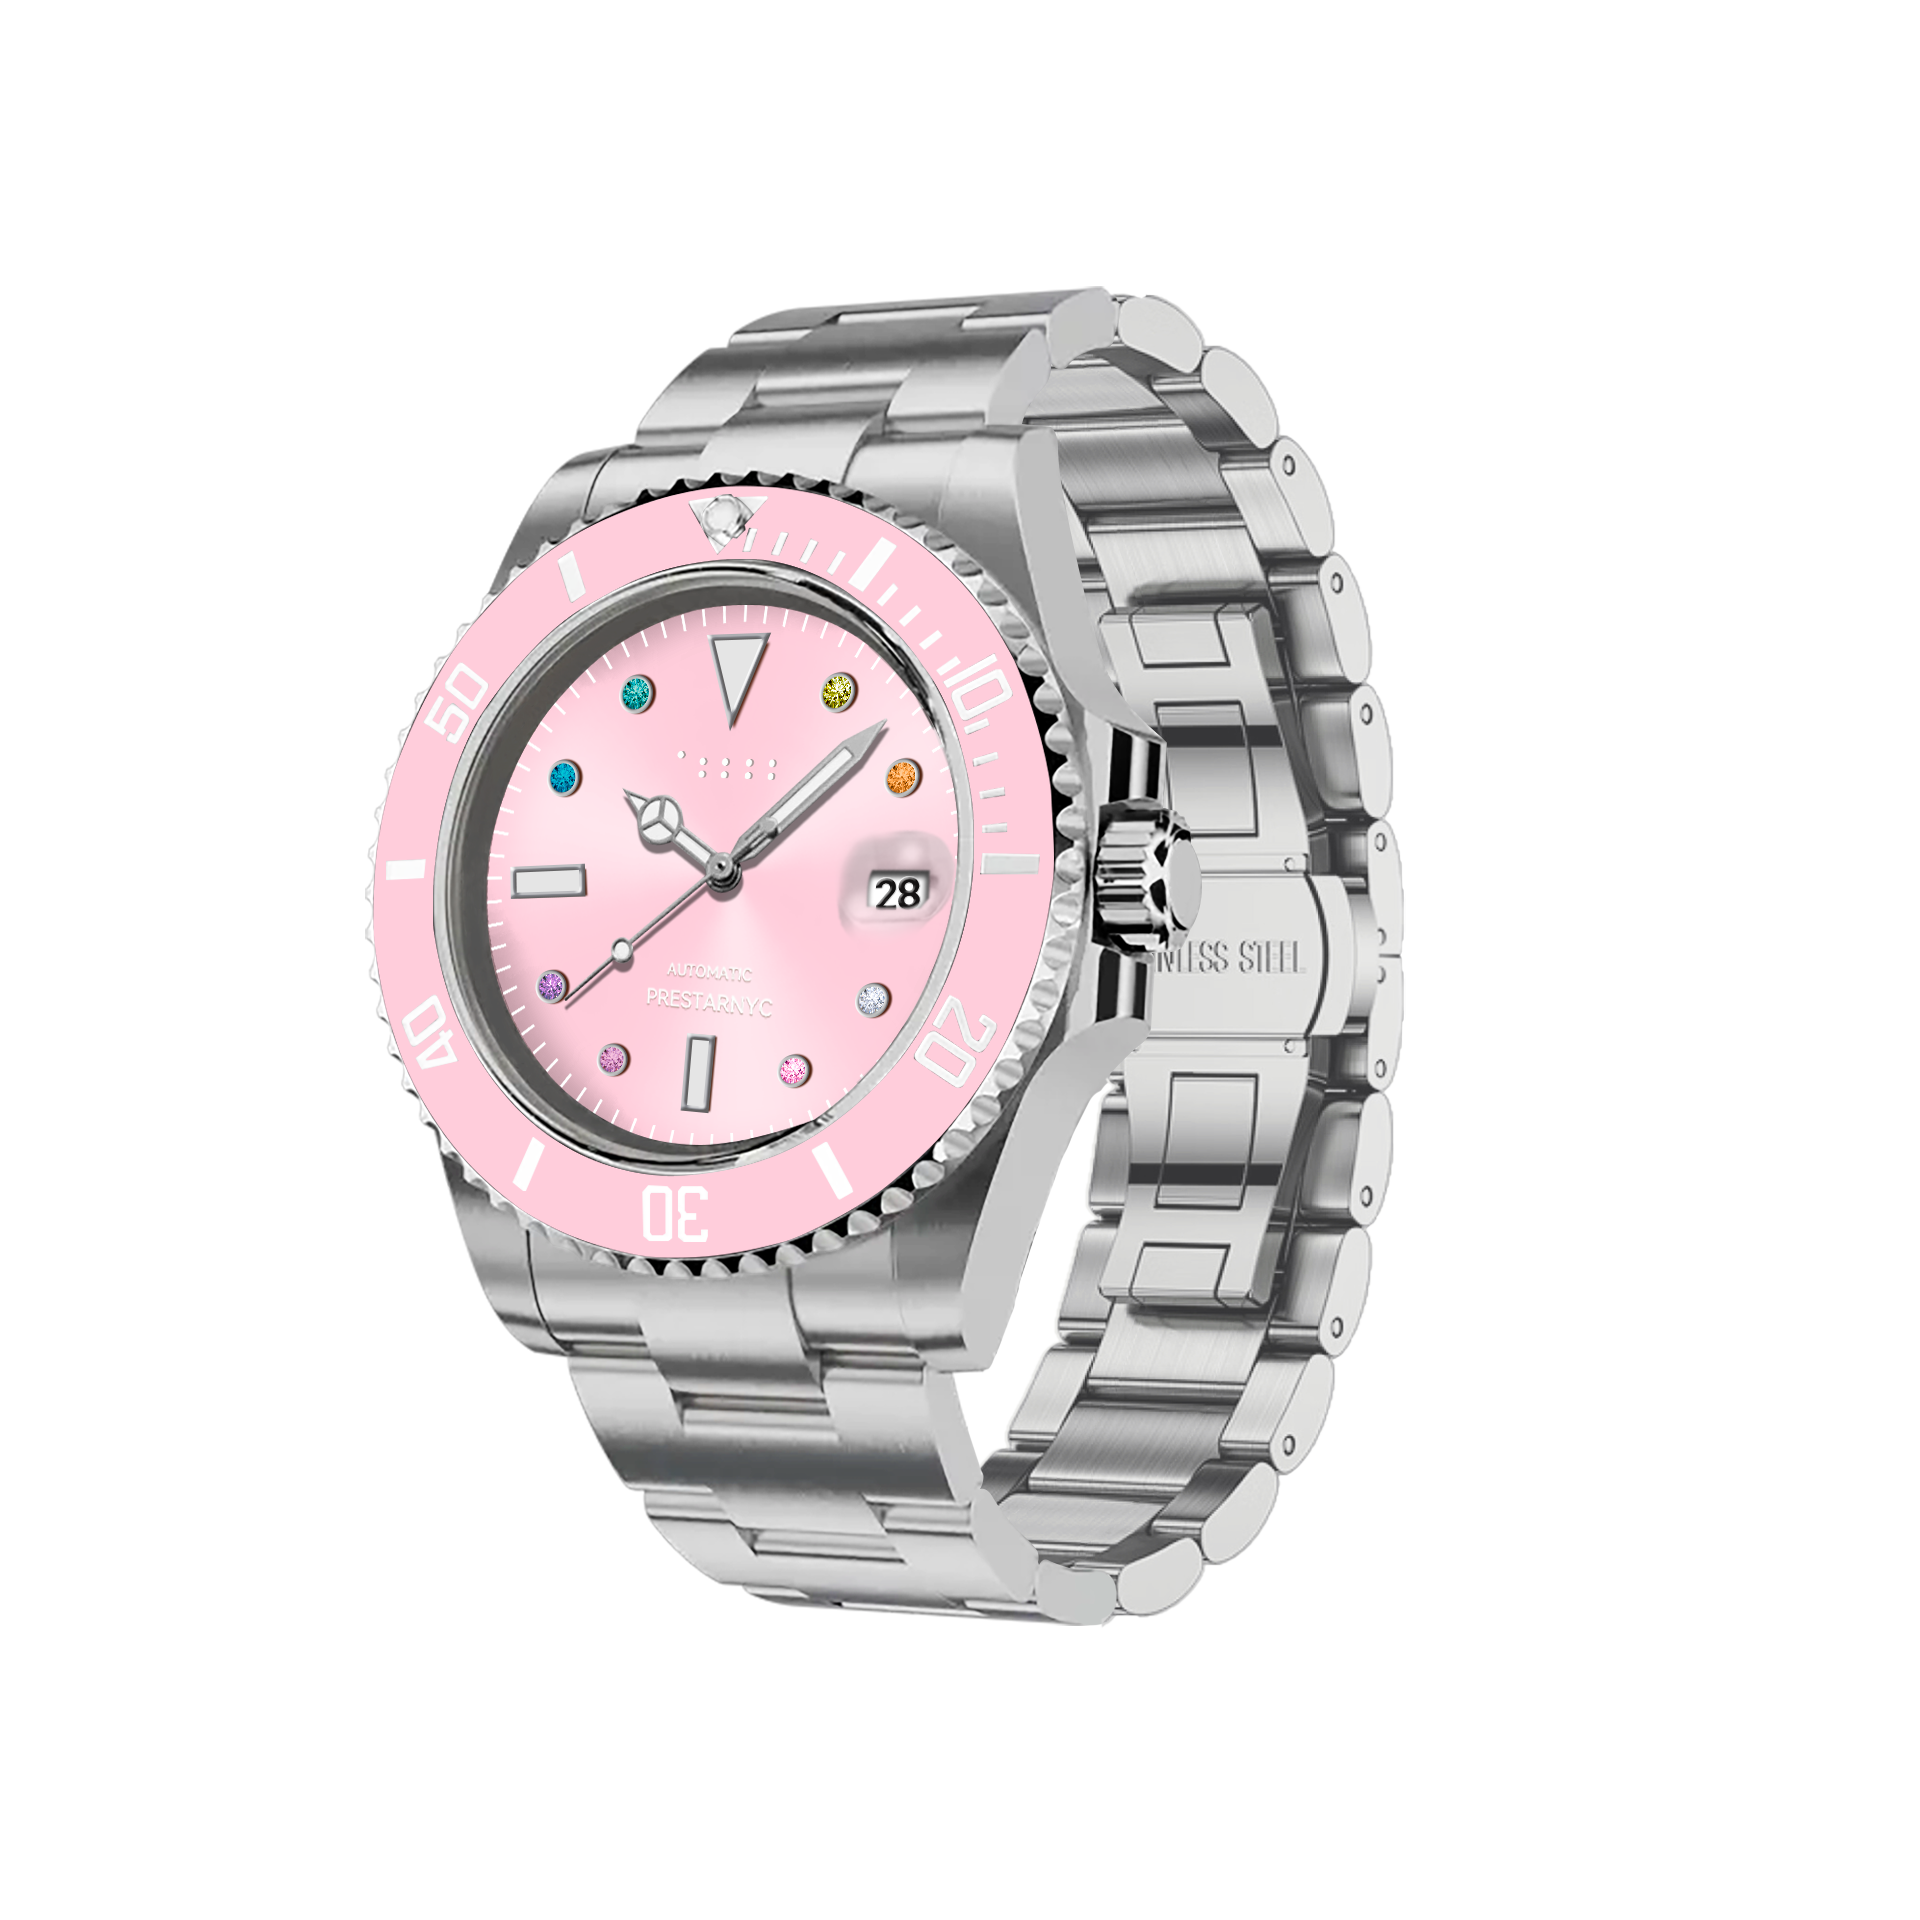 Prestar NYC Aquaman Classic Multi-Color Diamond Watch (Light Pink)